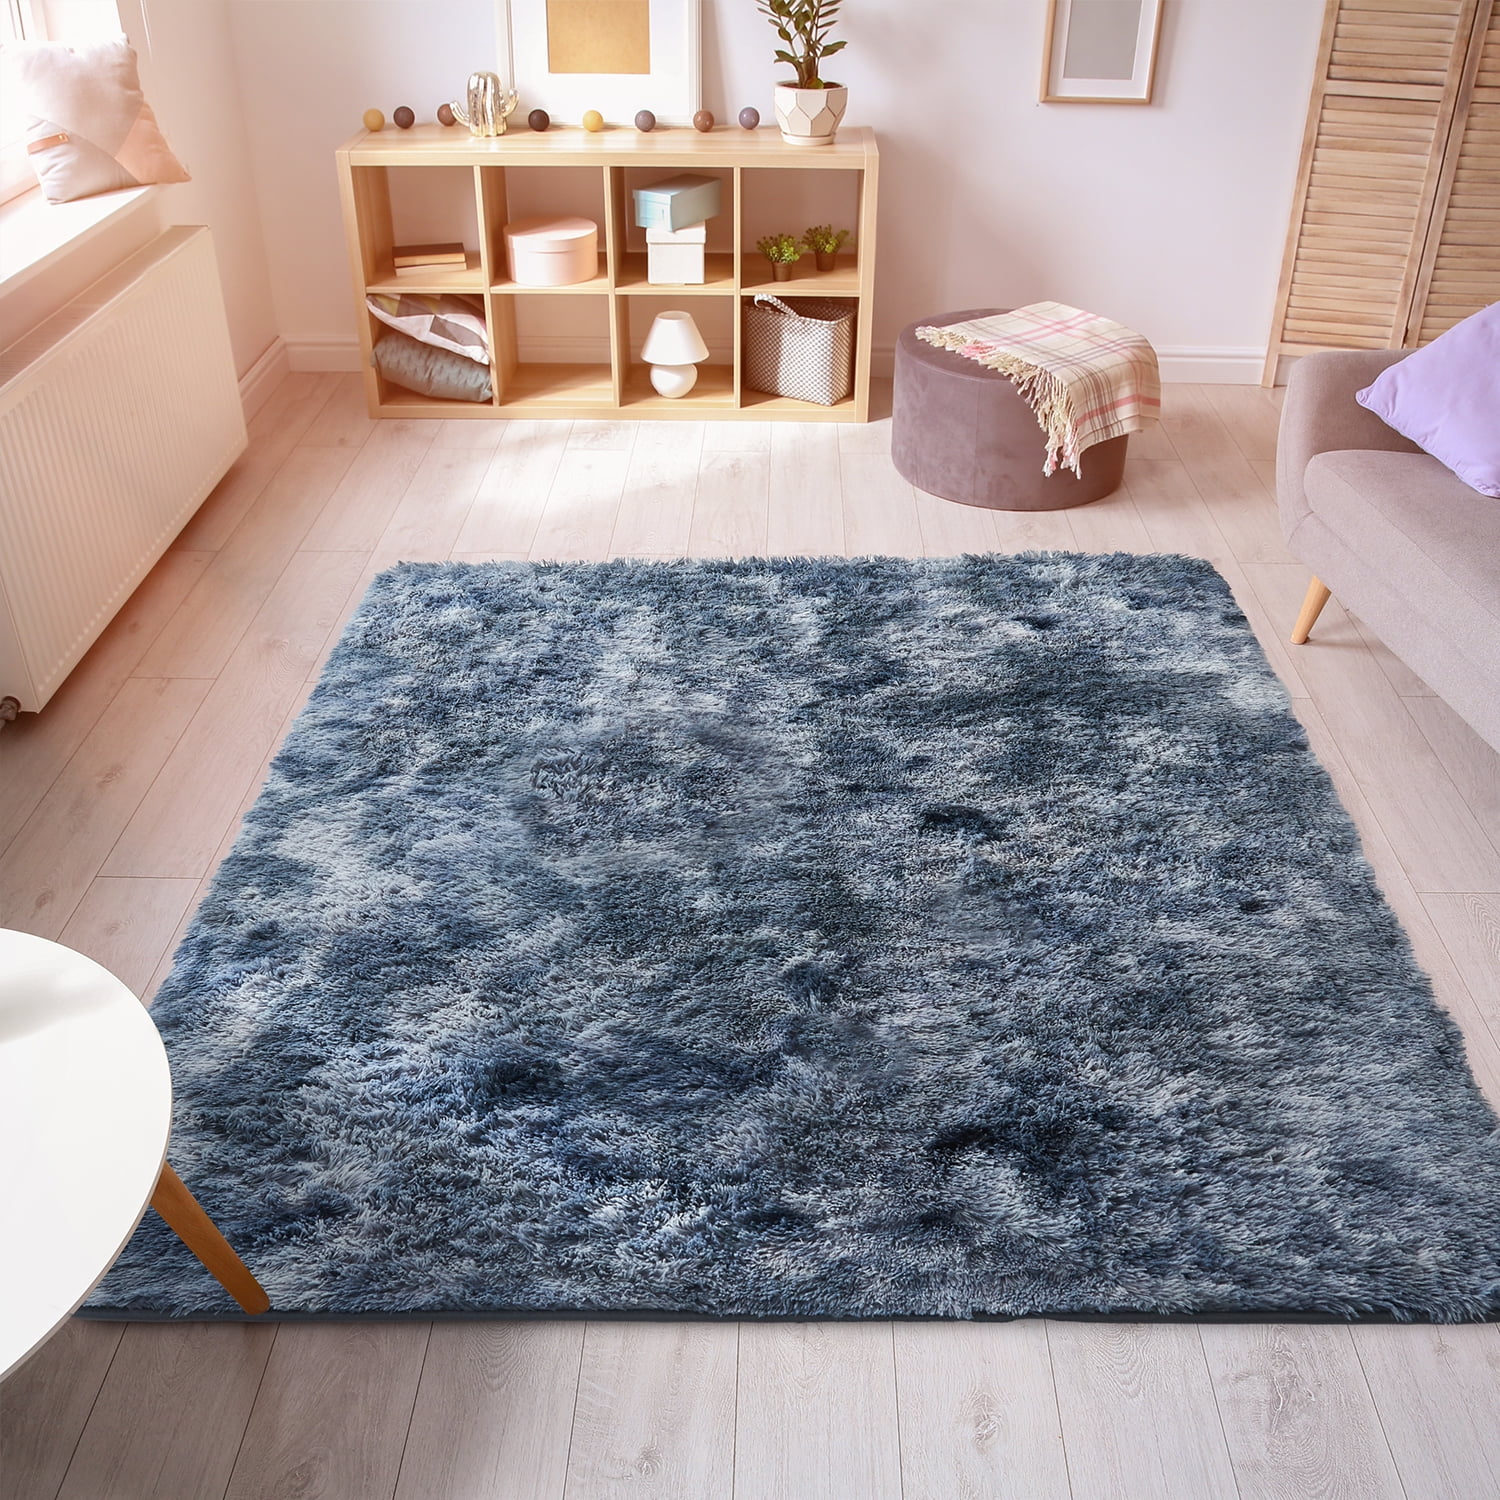 Luxury Fluffy Soft Fox Fur Rug Floor MatThick Chair Cover Blanket Area Carpet 